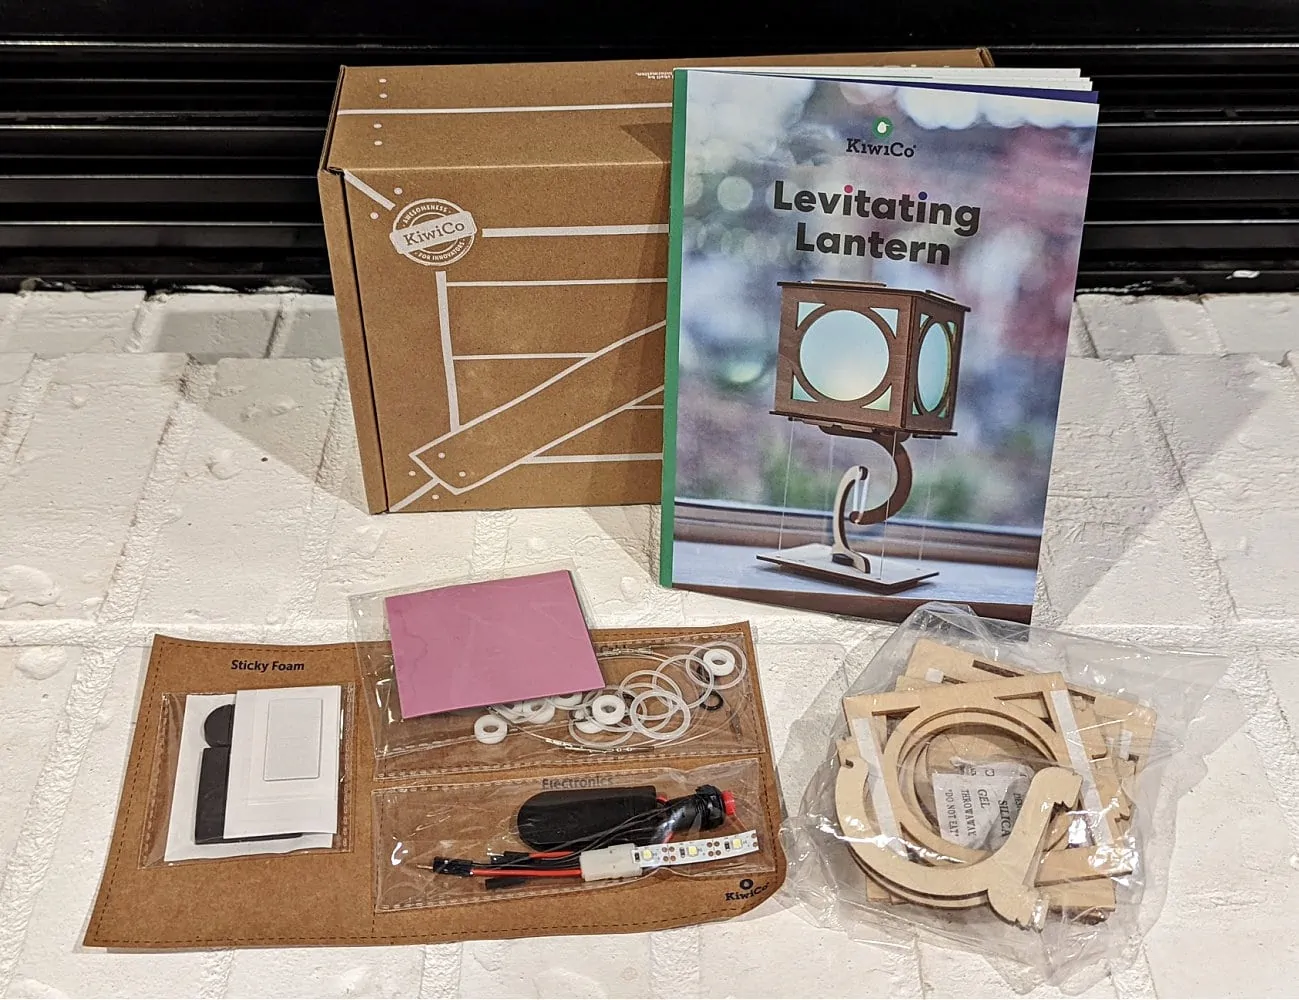 Kiwi Crate Levitating Lantern Materials